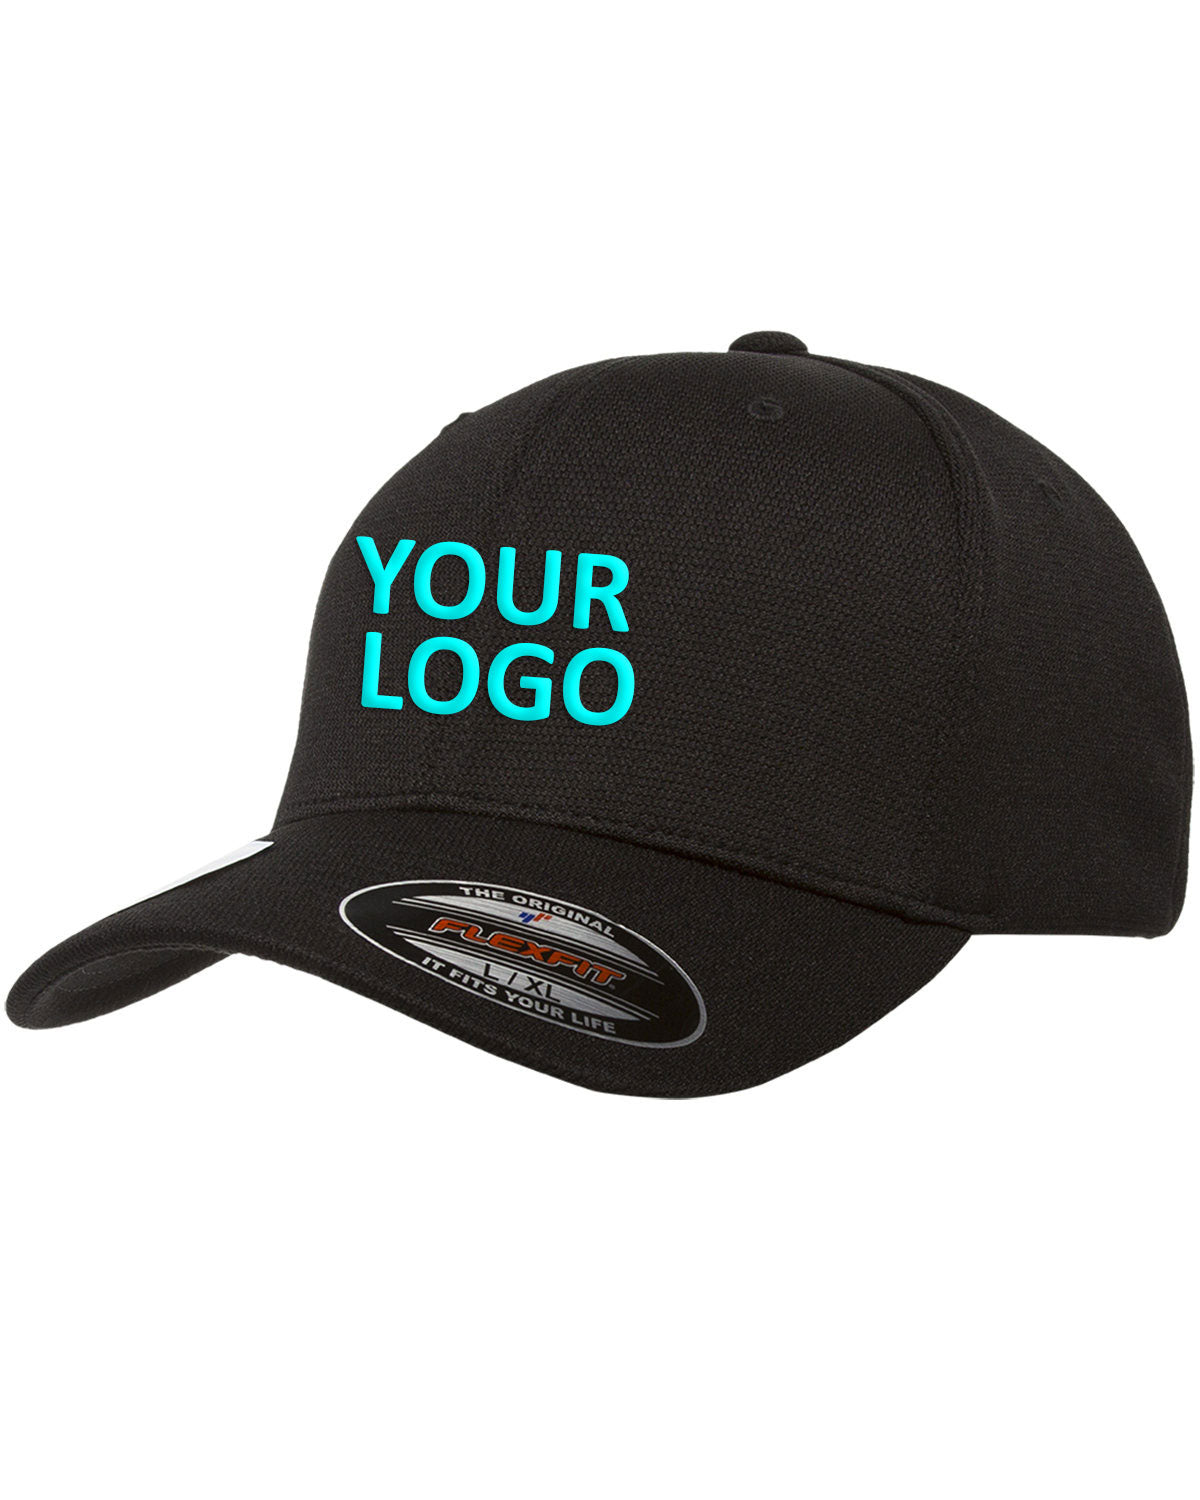 Flexfit Cool & Dry Sport Custom Caps, Black